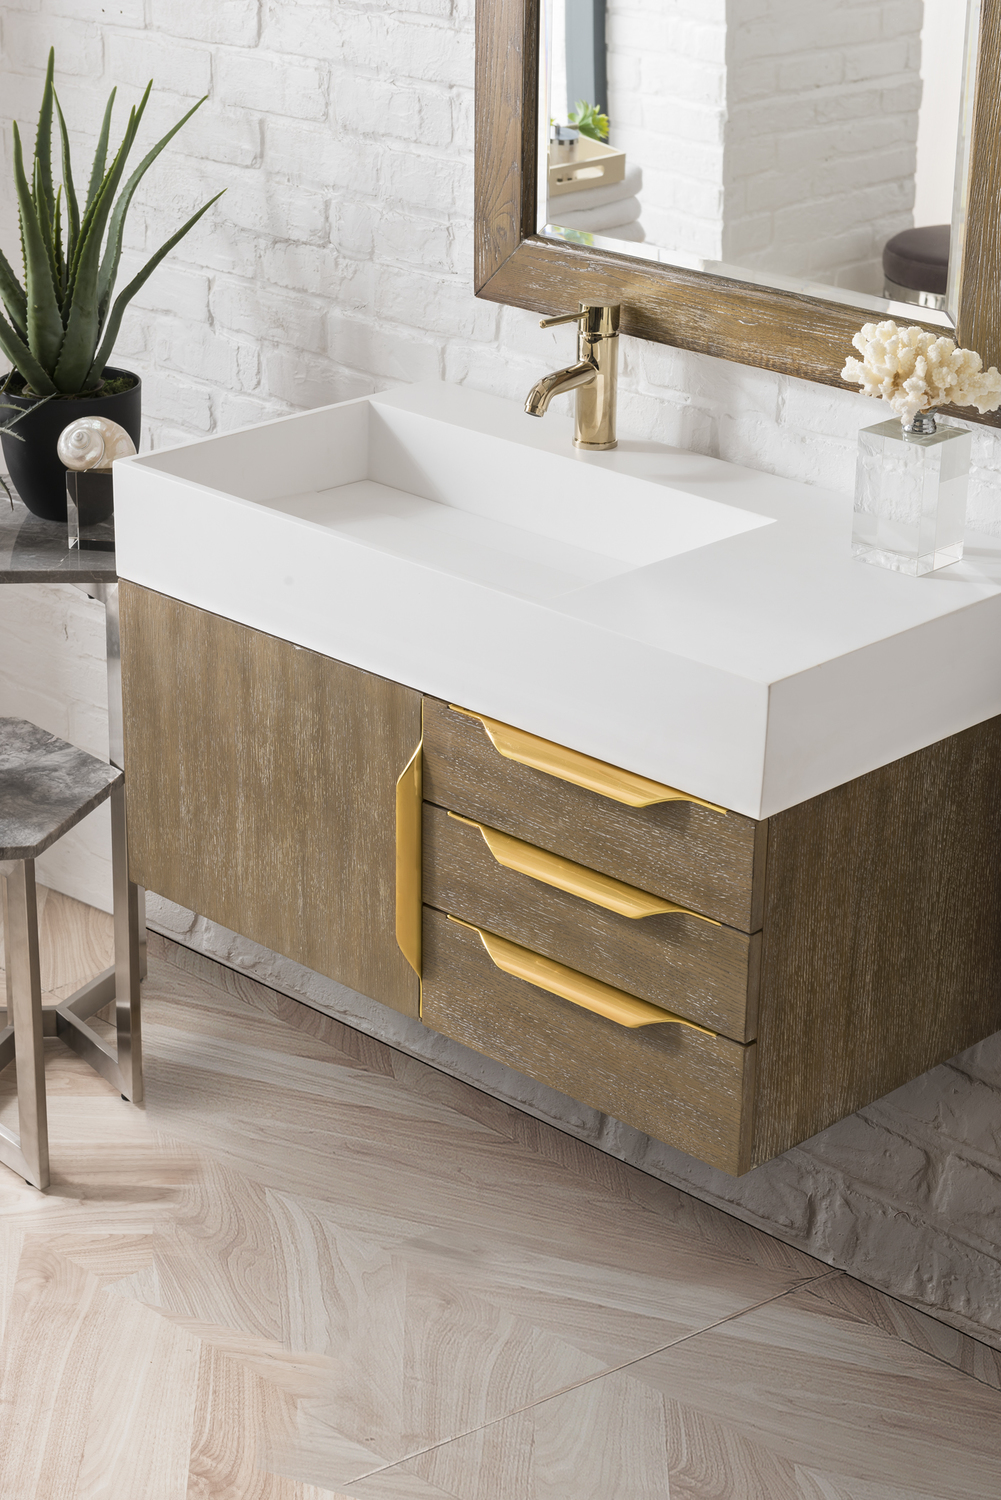 custom double sink vanity James Martin Vanity Latte Oak Modern